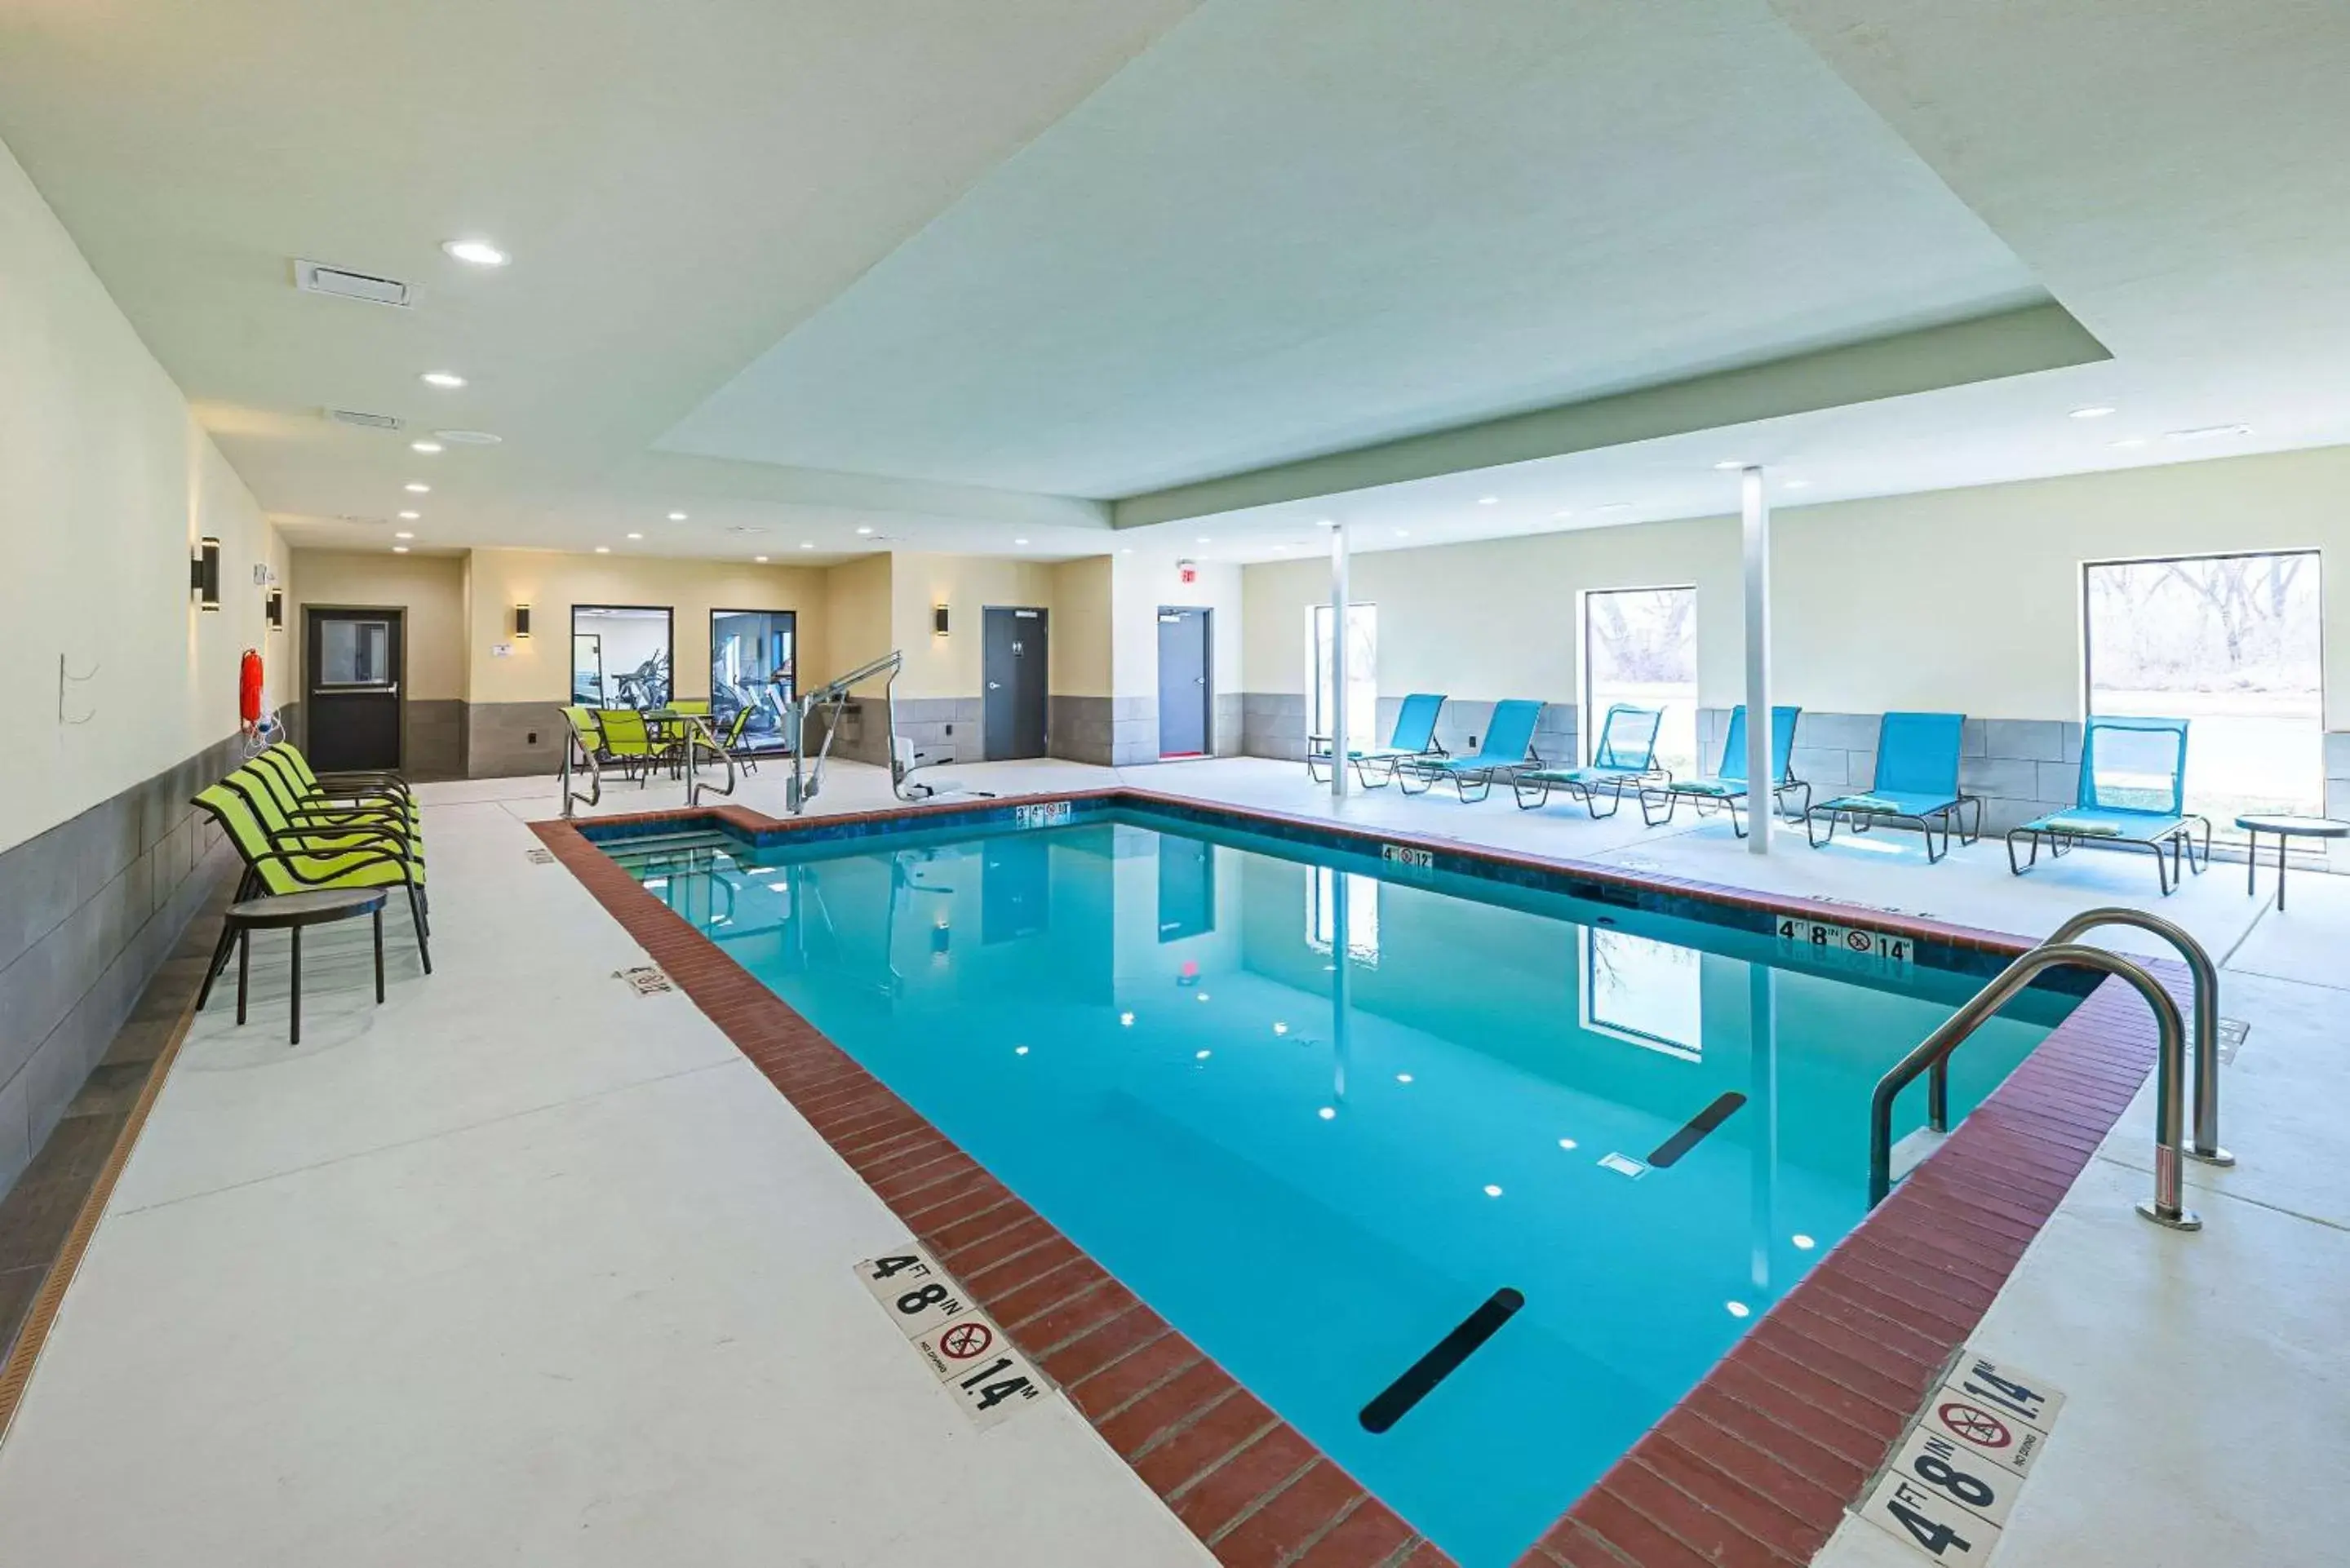 On site, Swimming Pool in Comfort Inn & Suites Oklahoma City near Bricktown